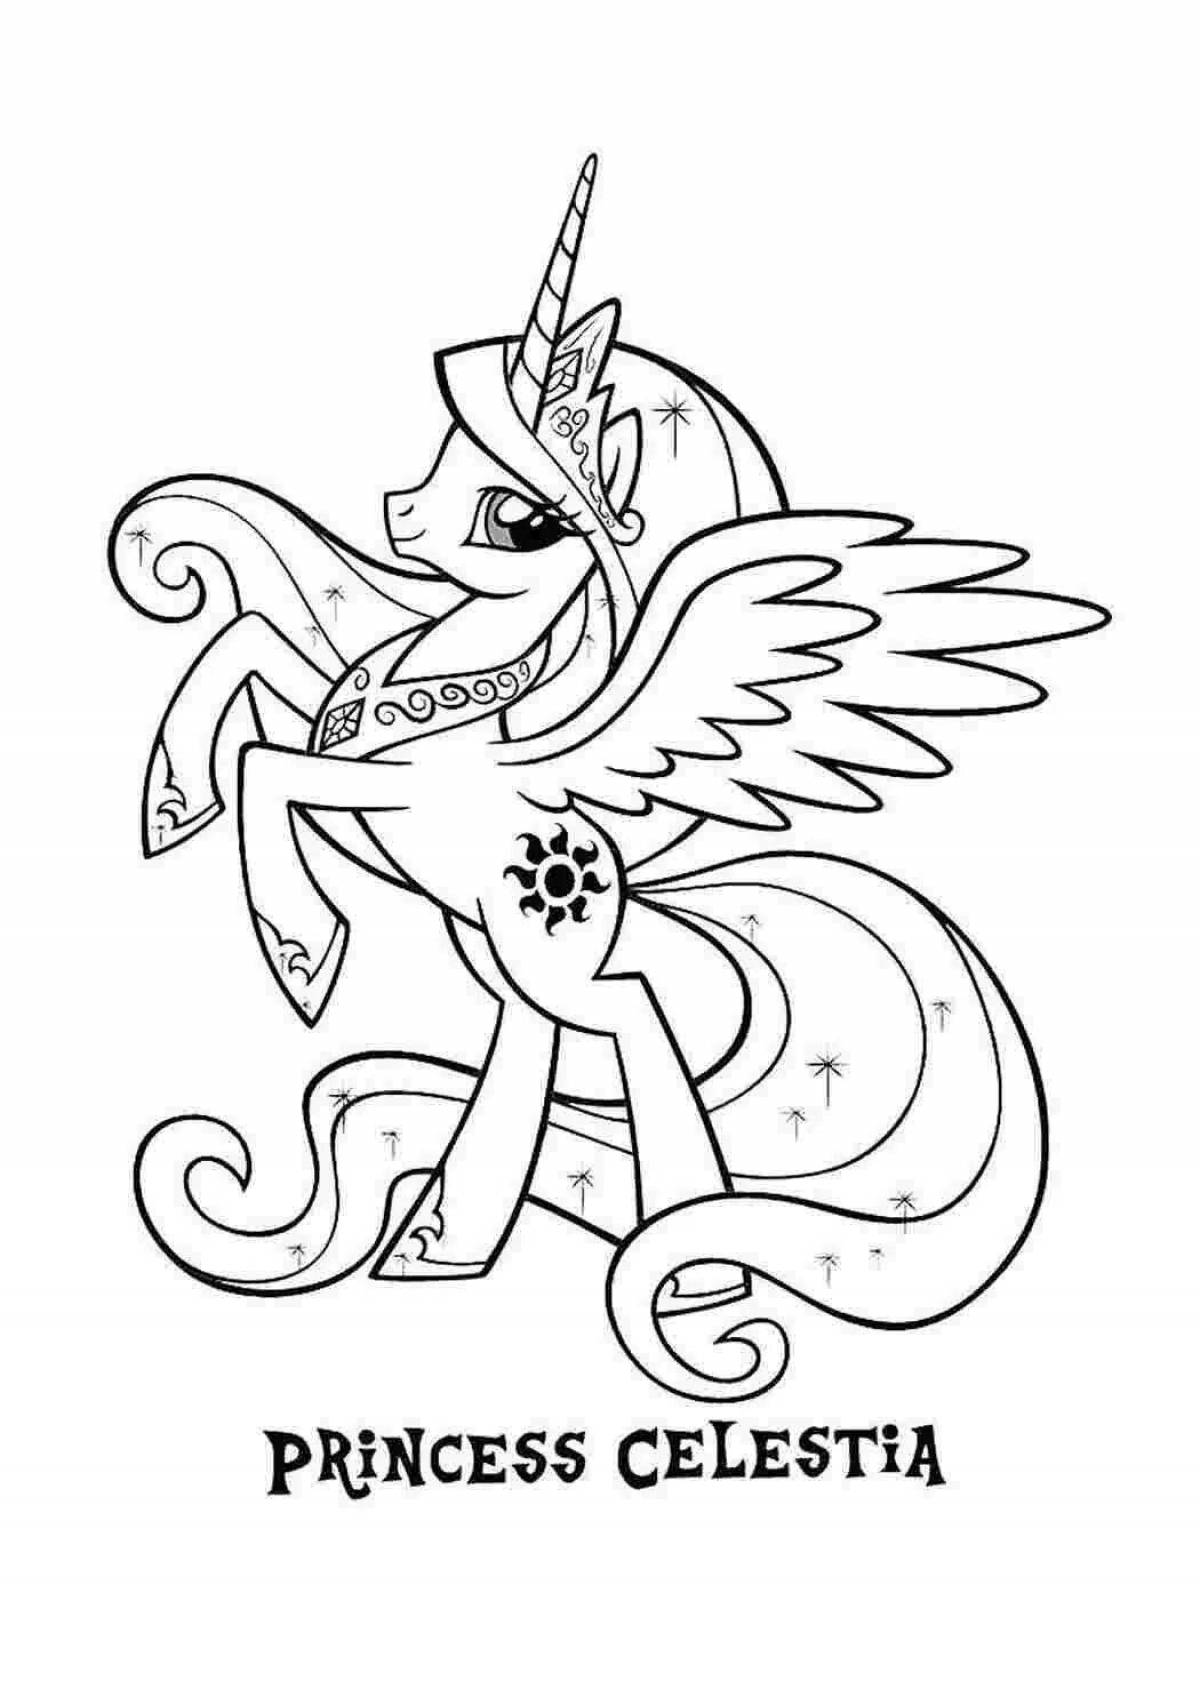 Celestia unicorn mystical coloring book